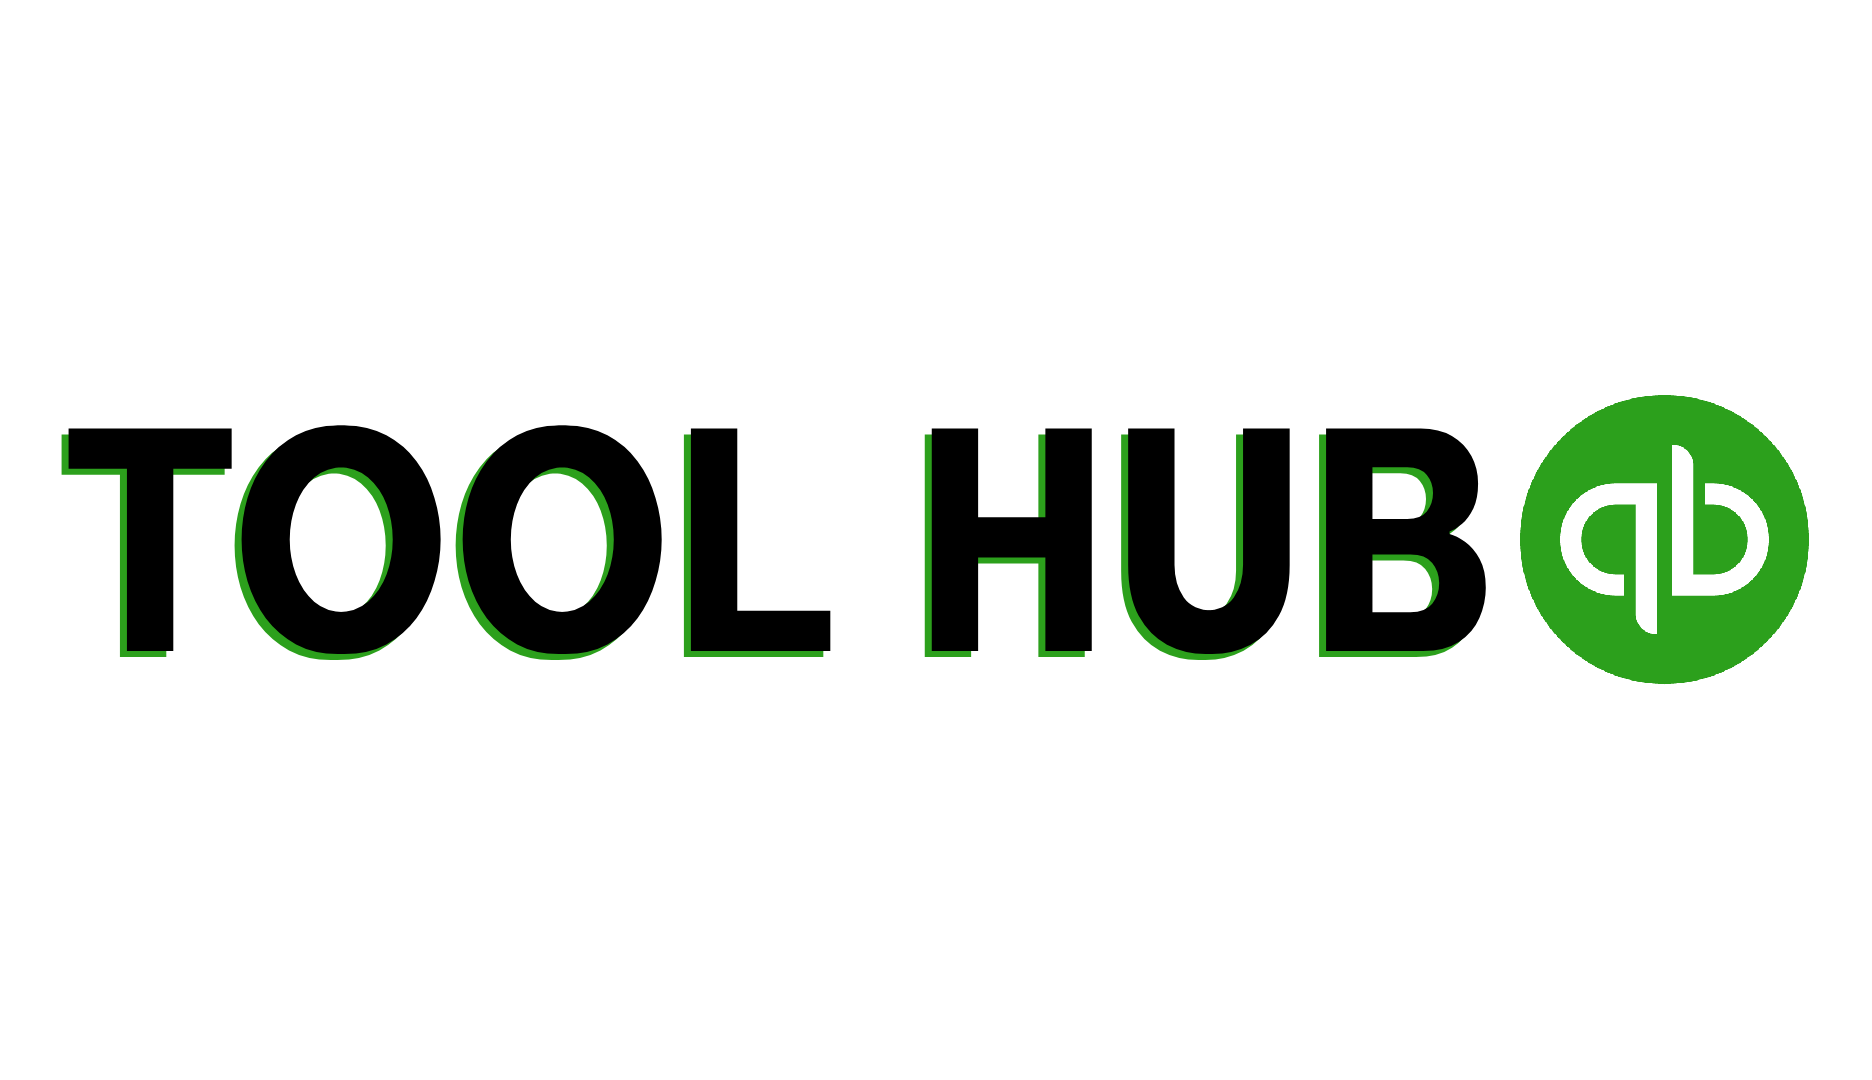 Quickbooks tool hub logo